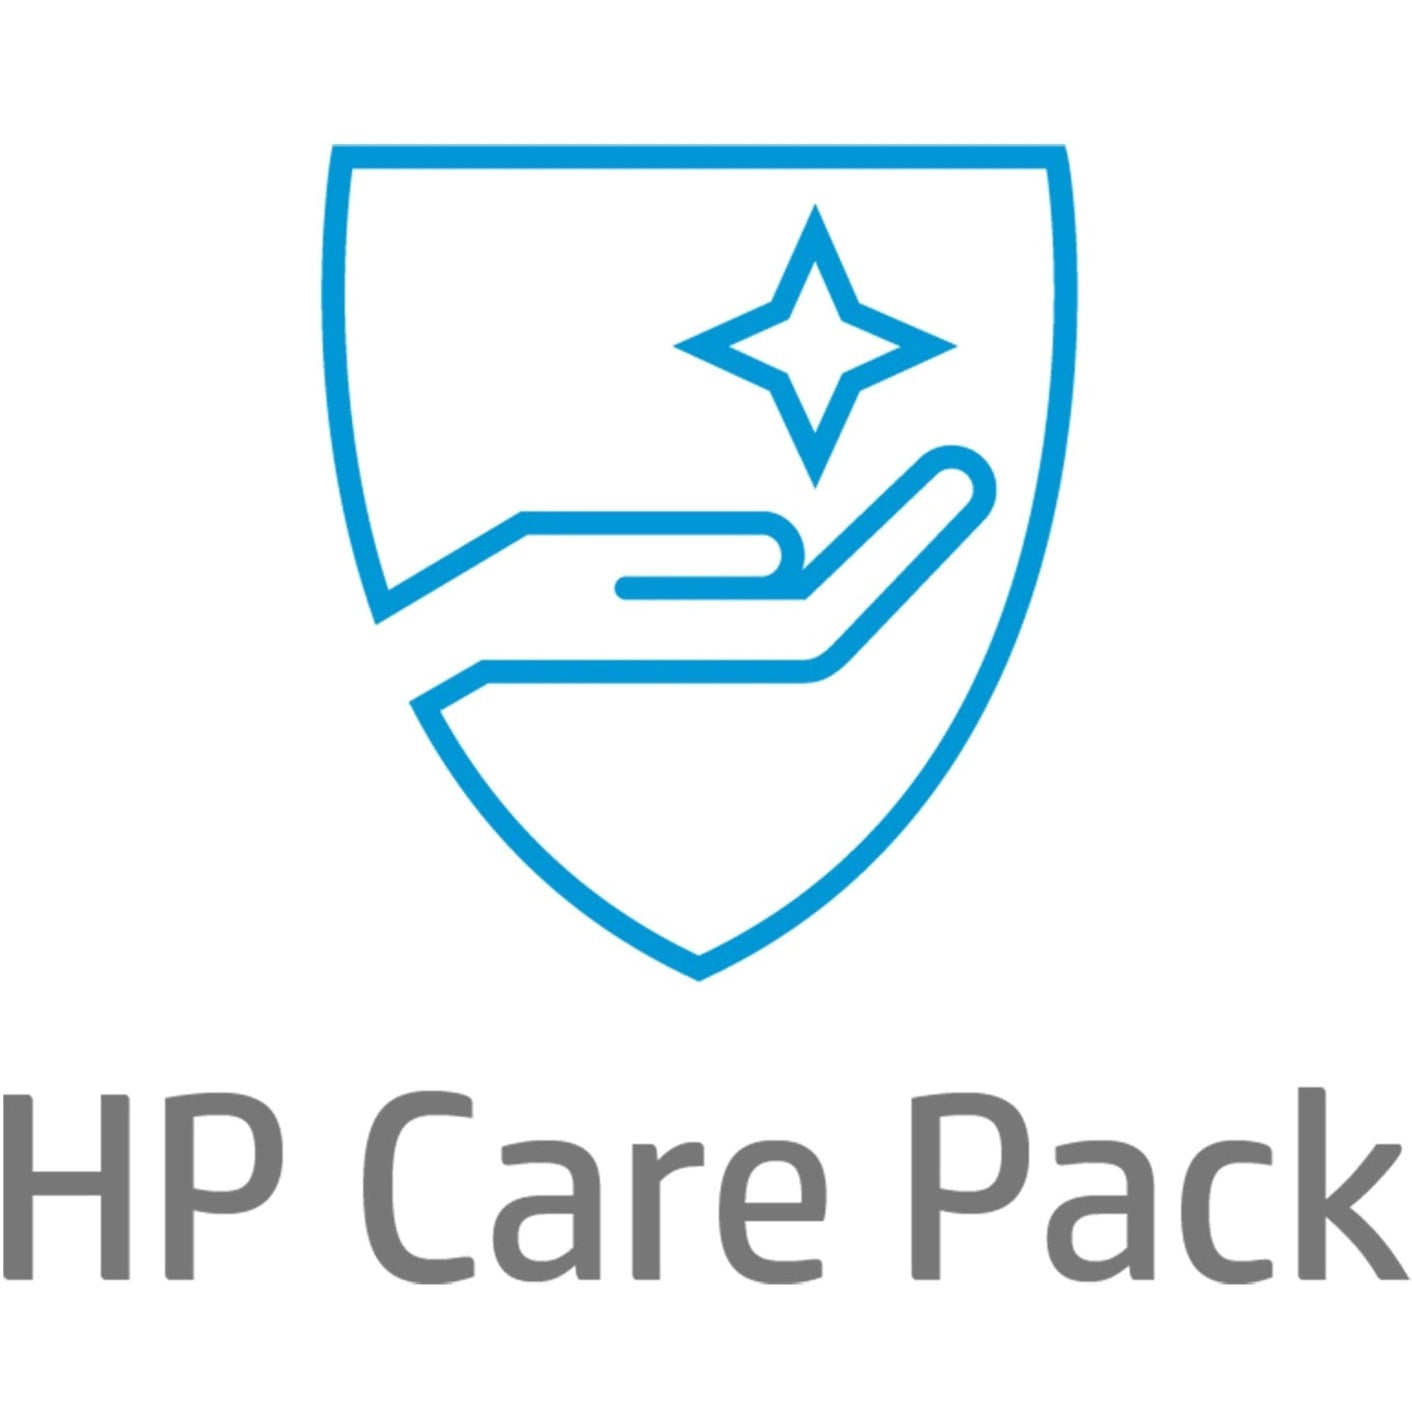 HP Care Pack - 4 Year - Service (UK748E)